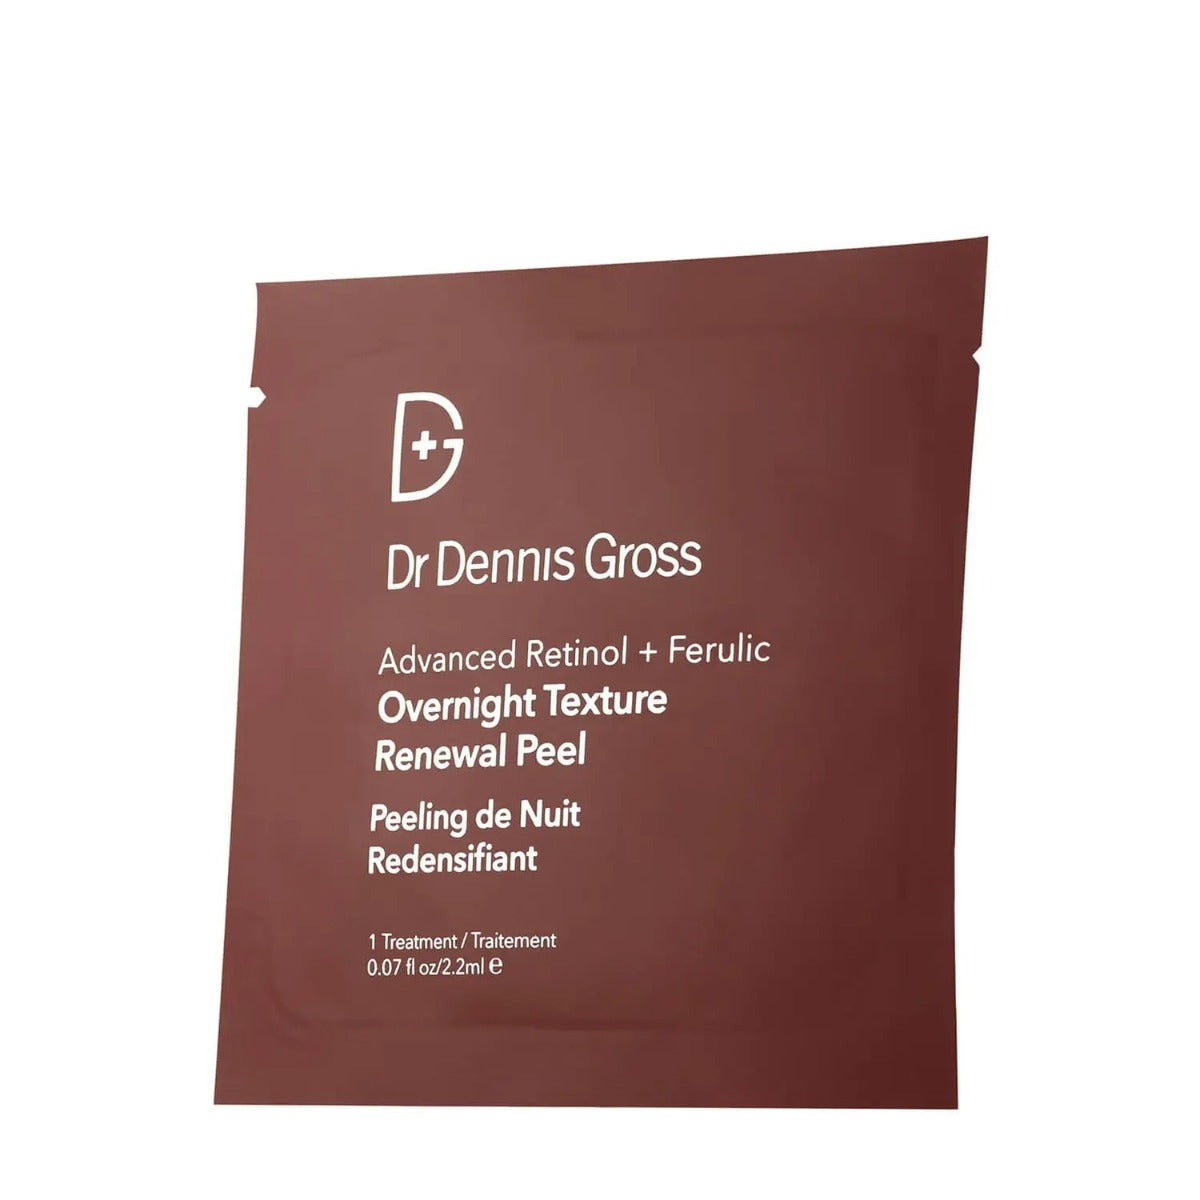 Dr Dennis Gross Advanced Retinol + Ferulic Overnight Recovery Texture Renewal Peel